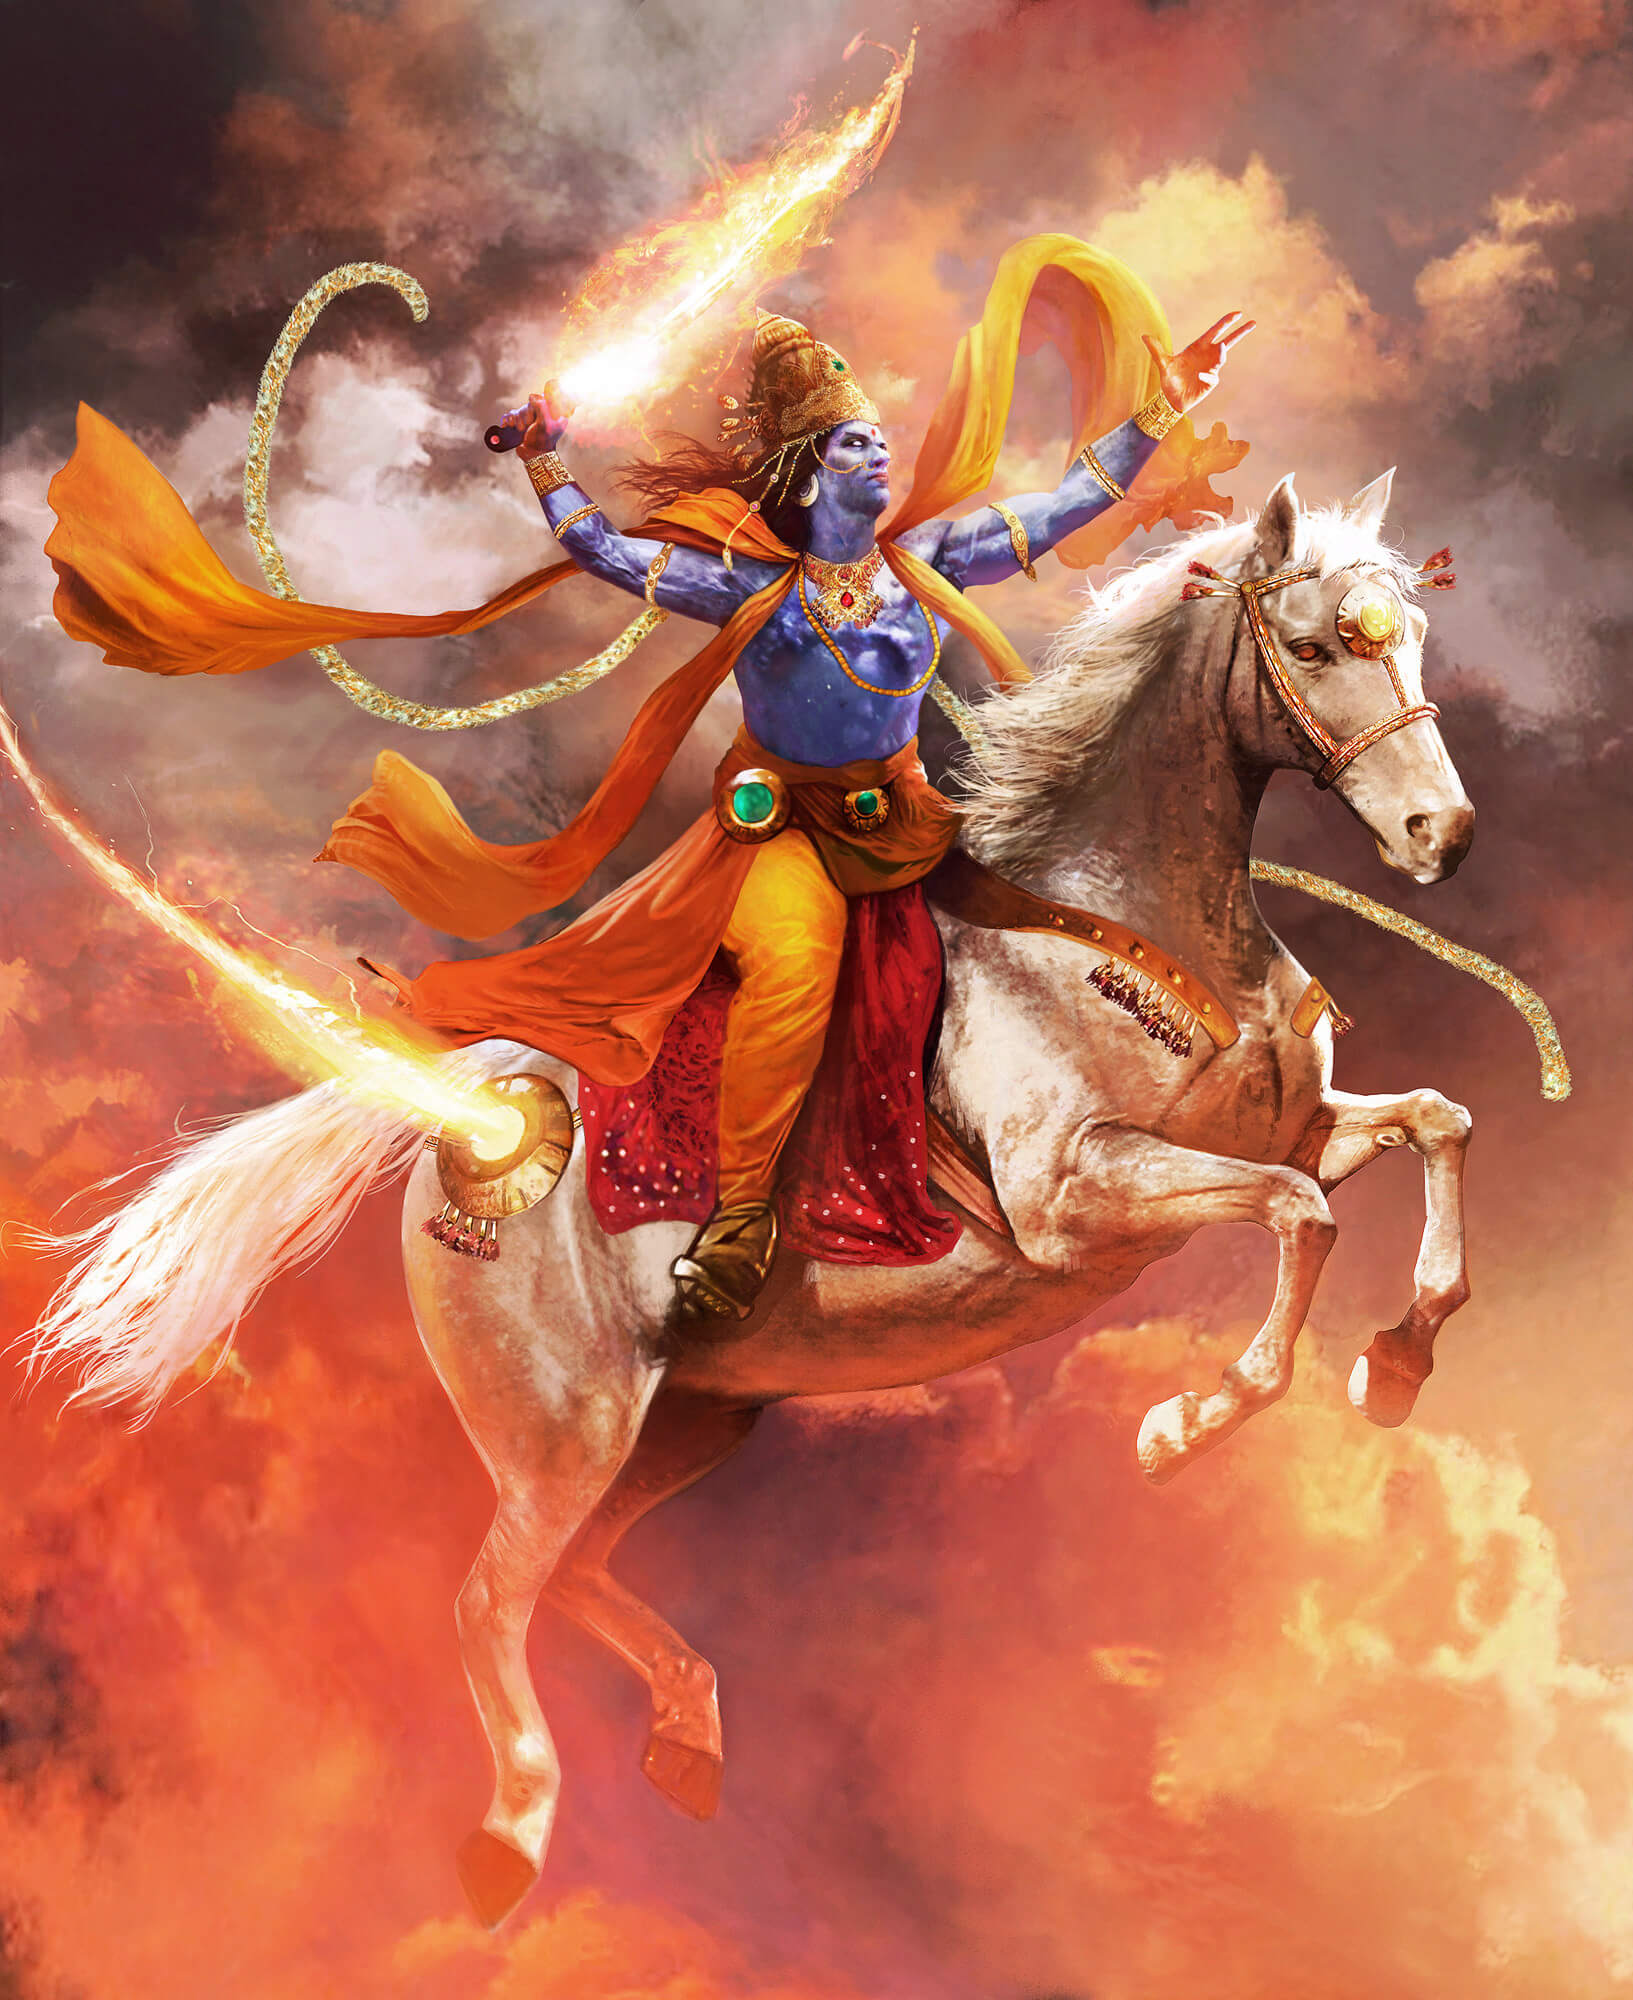 5 lesser known facts about the Kalki avatar of Vishnu – The Last Avatar